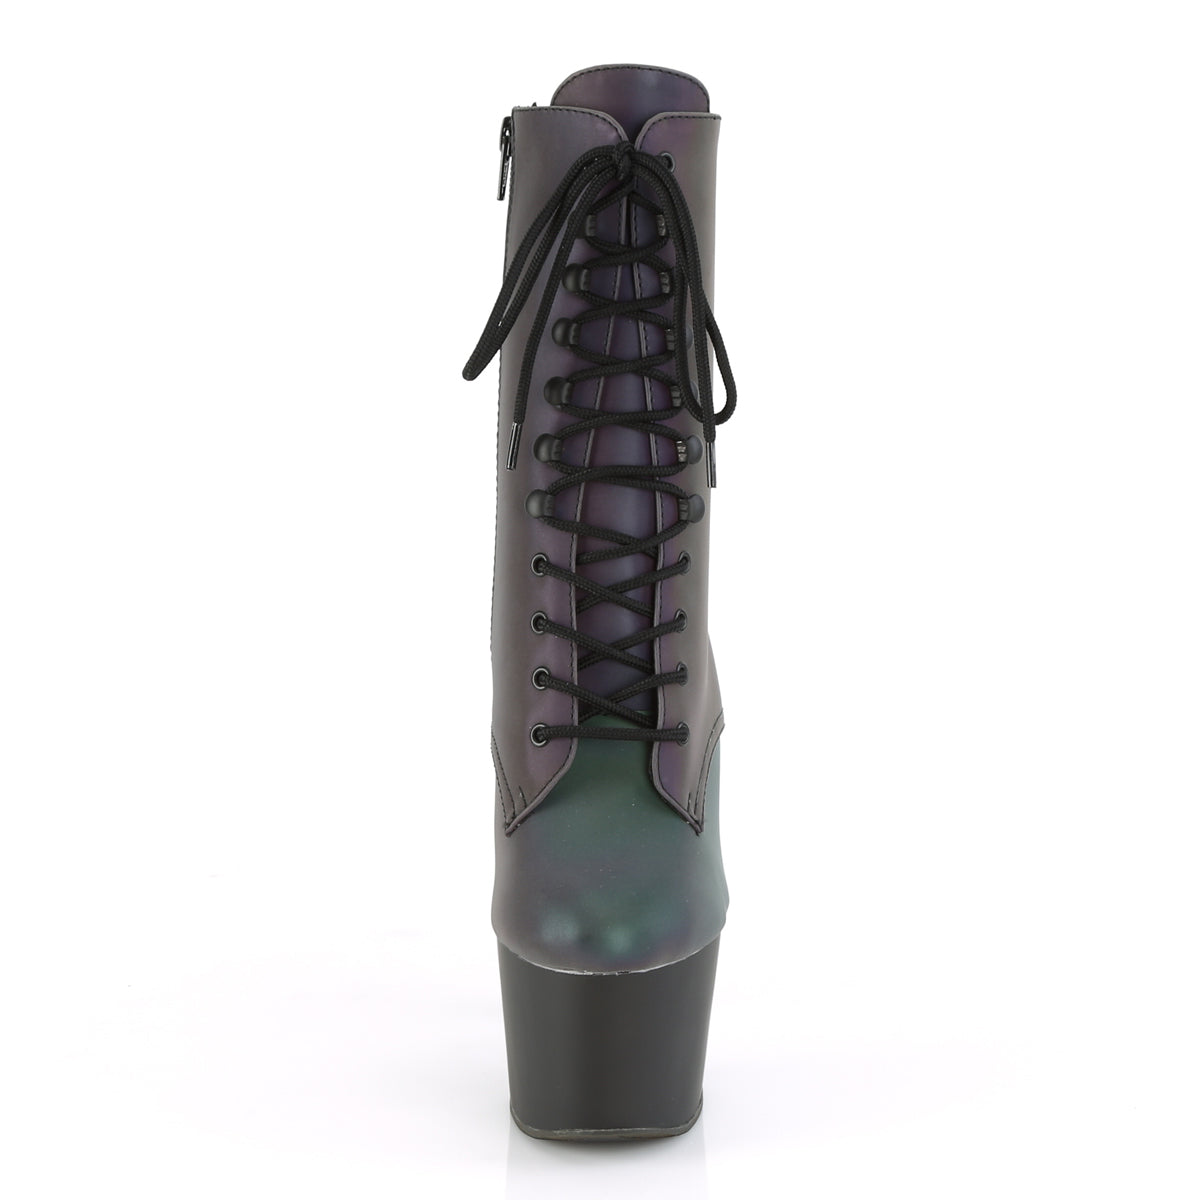 Pleaser Womens Ankle Boots ADORE-1020REFL Green Multi Reflective/Blk Matte